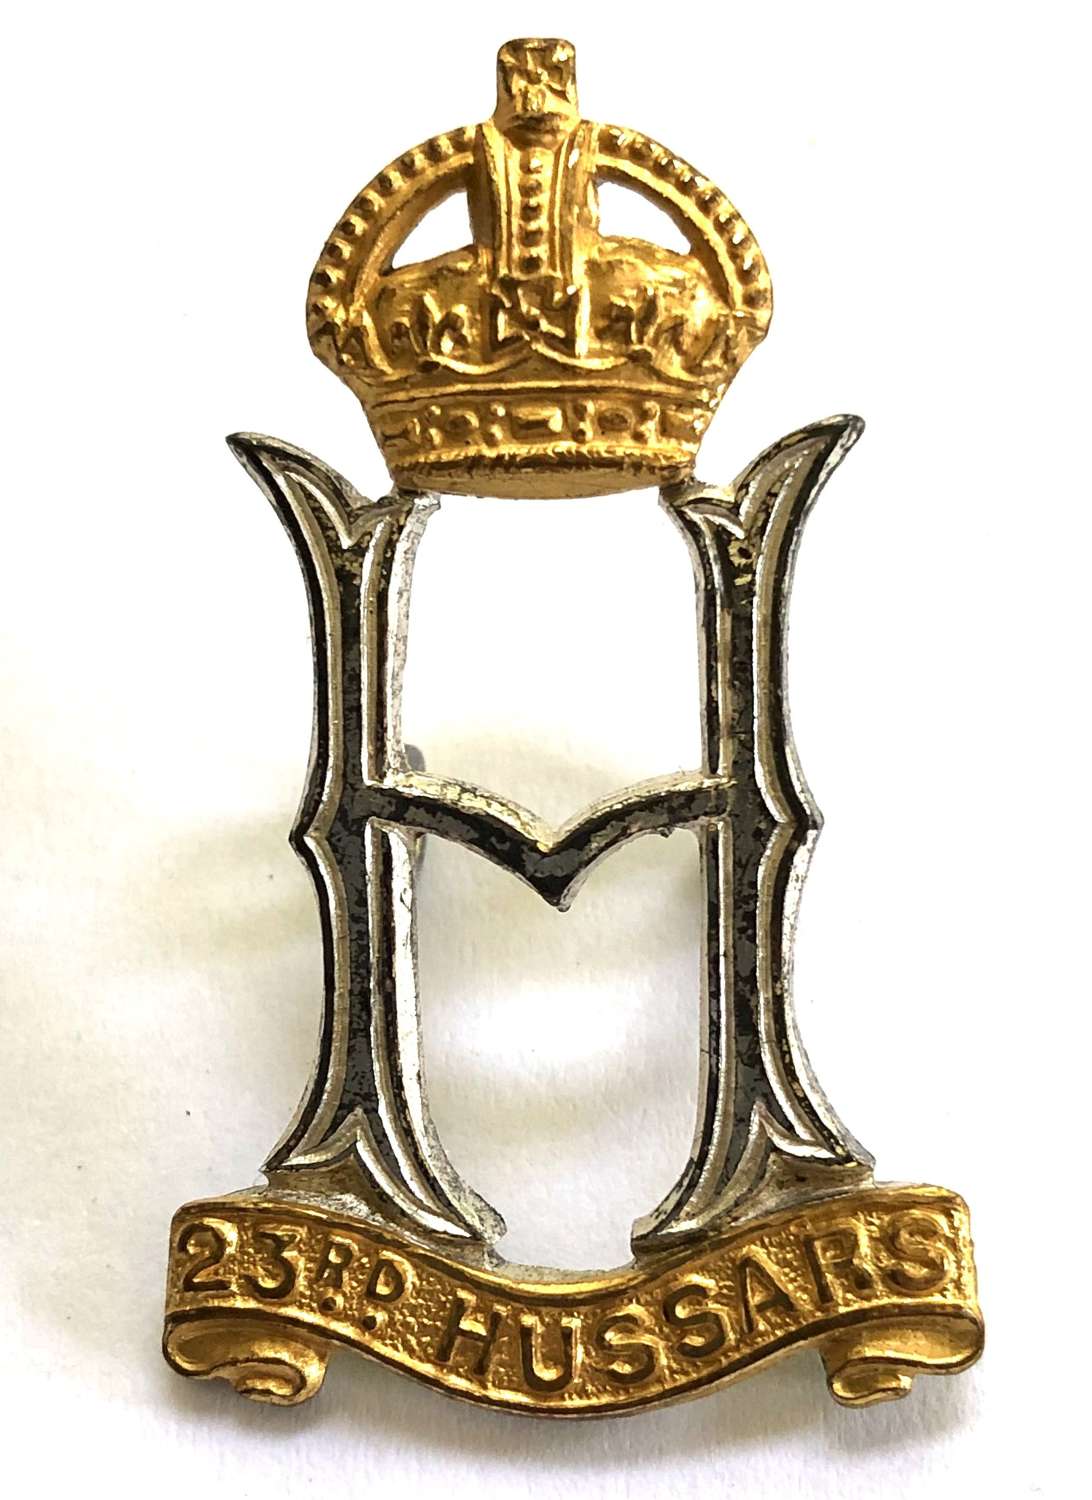 23rd Hussars war raised Officer's cap badge circa 1940-46.